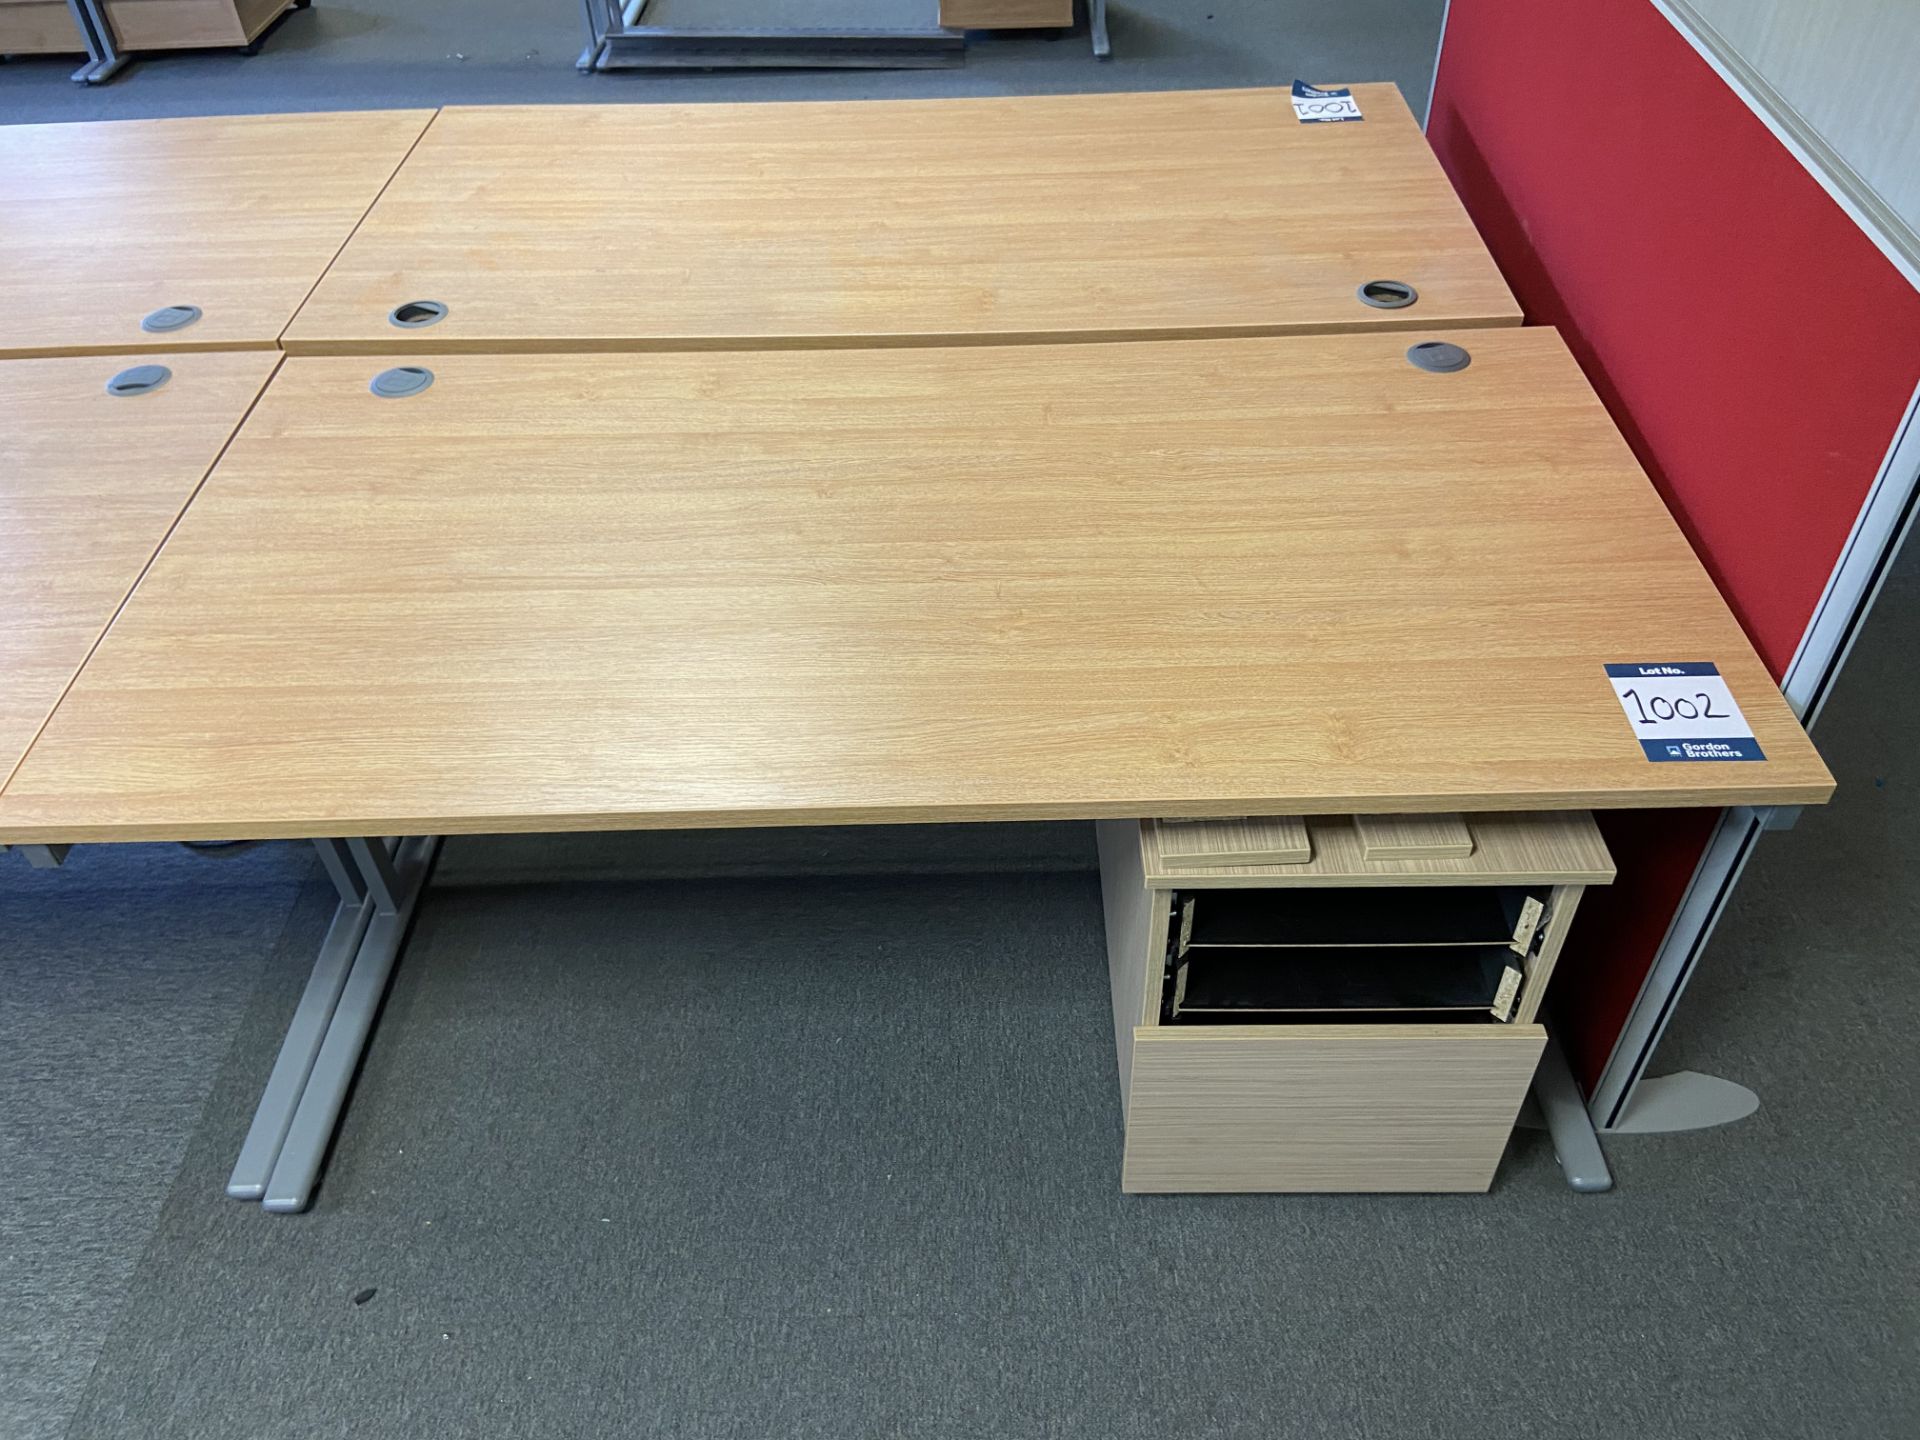 Lot comprisng: three rectangular desks, three 2 drawer mobile pedestals & one white 12 bin pigeon - Image 2 of 3